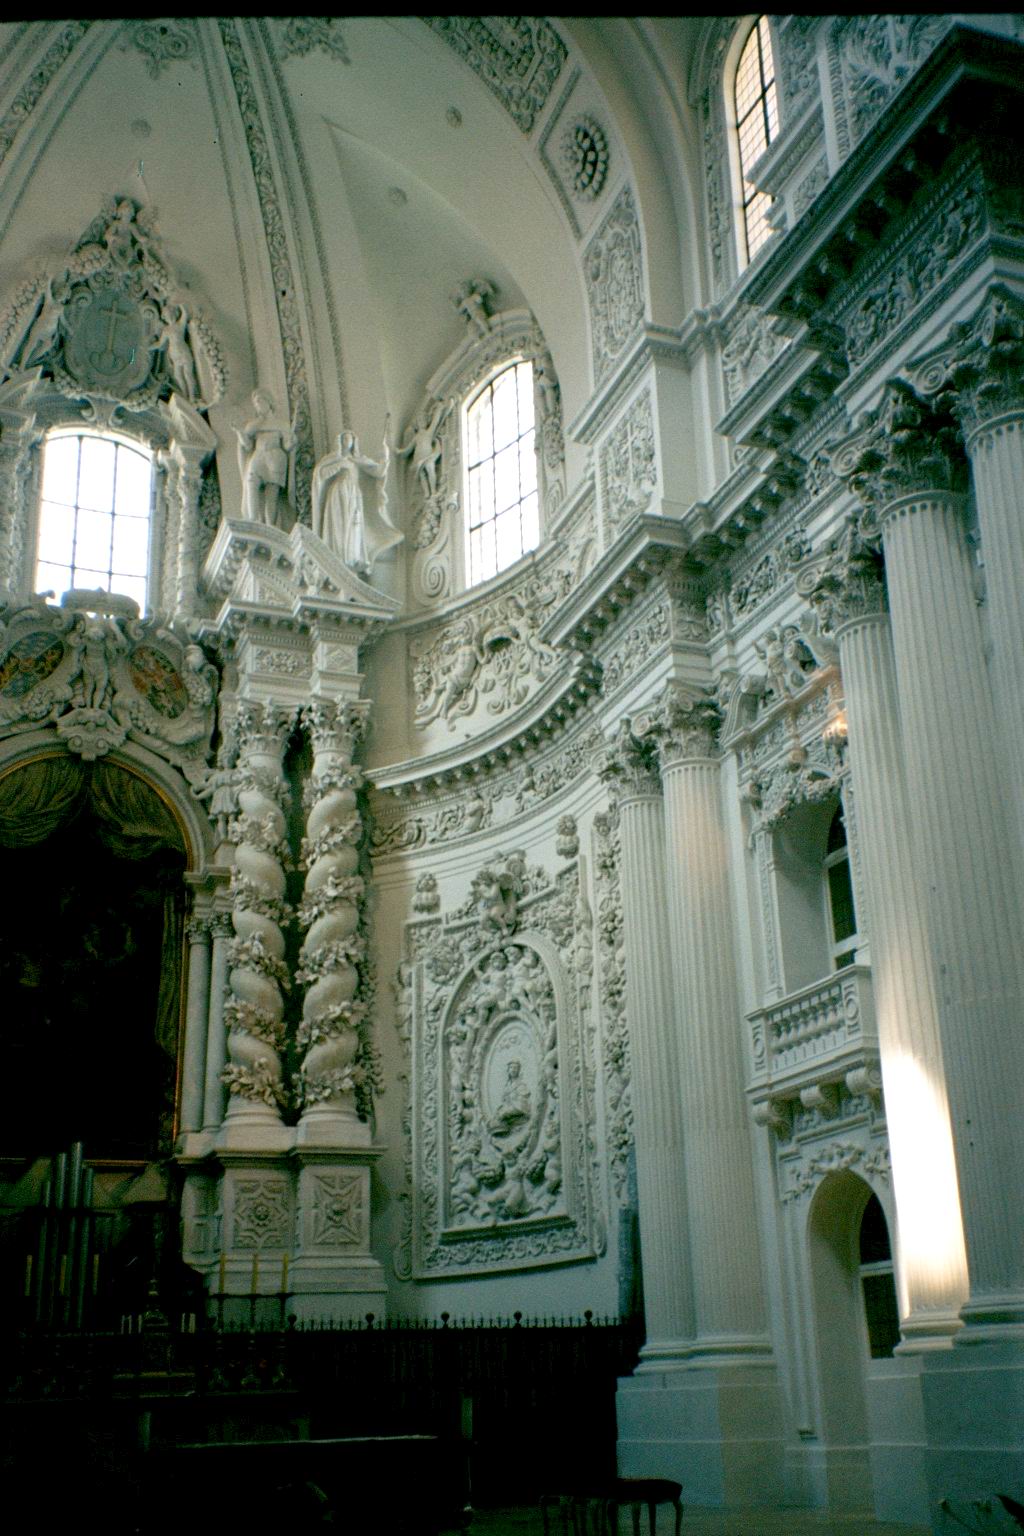 Some very white church interior in Munich